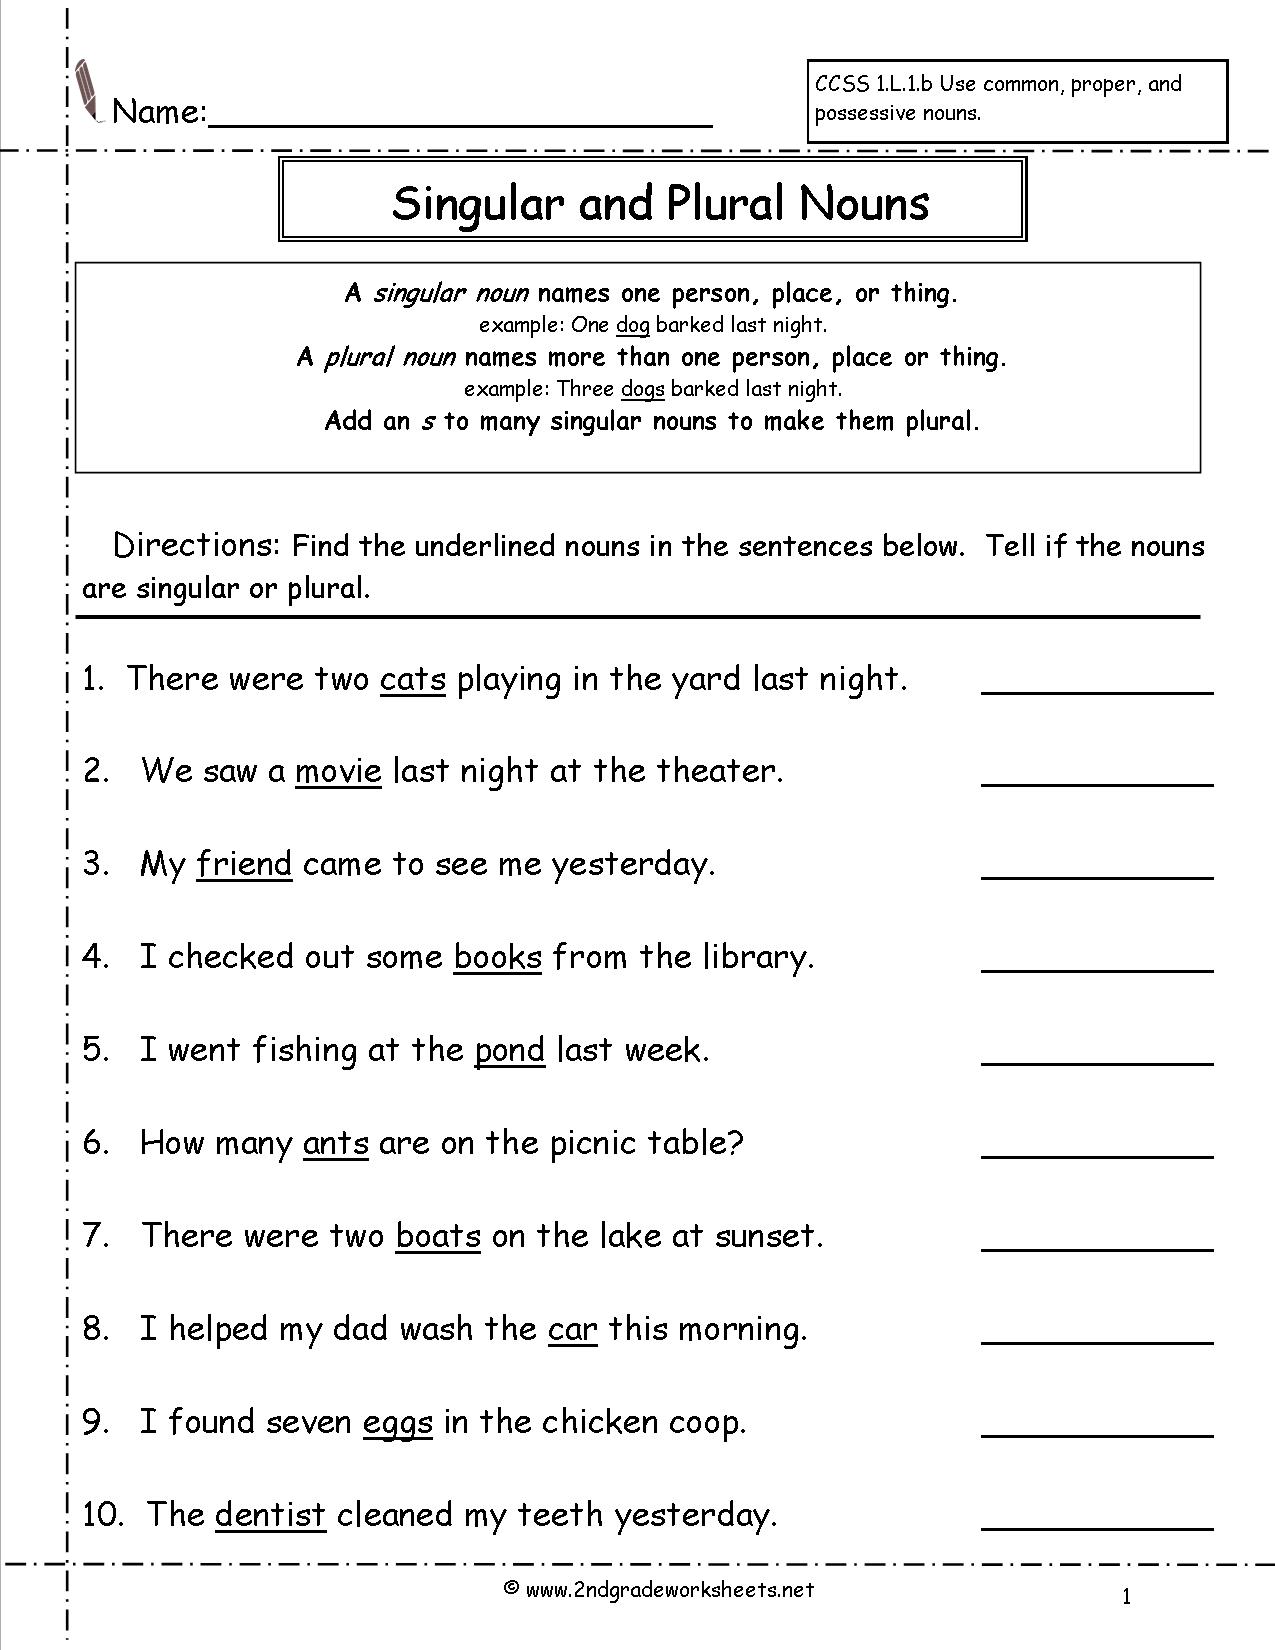 15 Best Images Of Common Nouns Worksheet Grade 4 Collective Noun Worksheet 6th Grade Verb